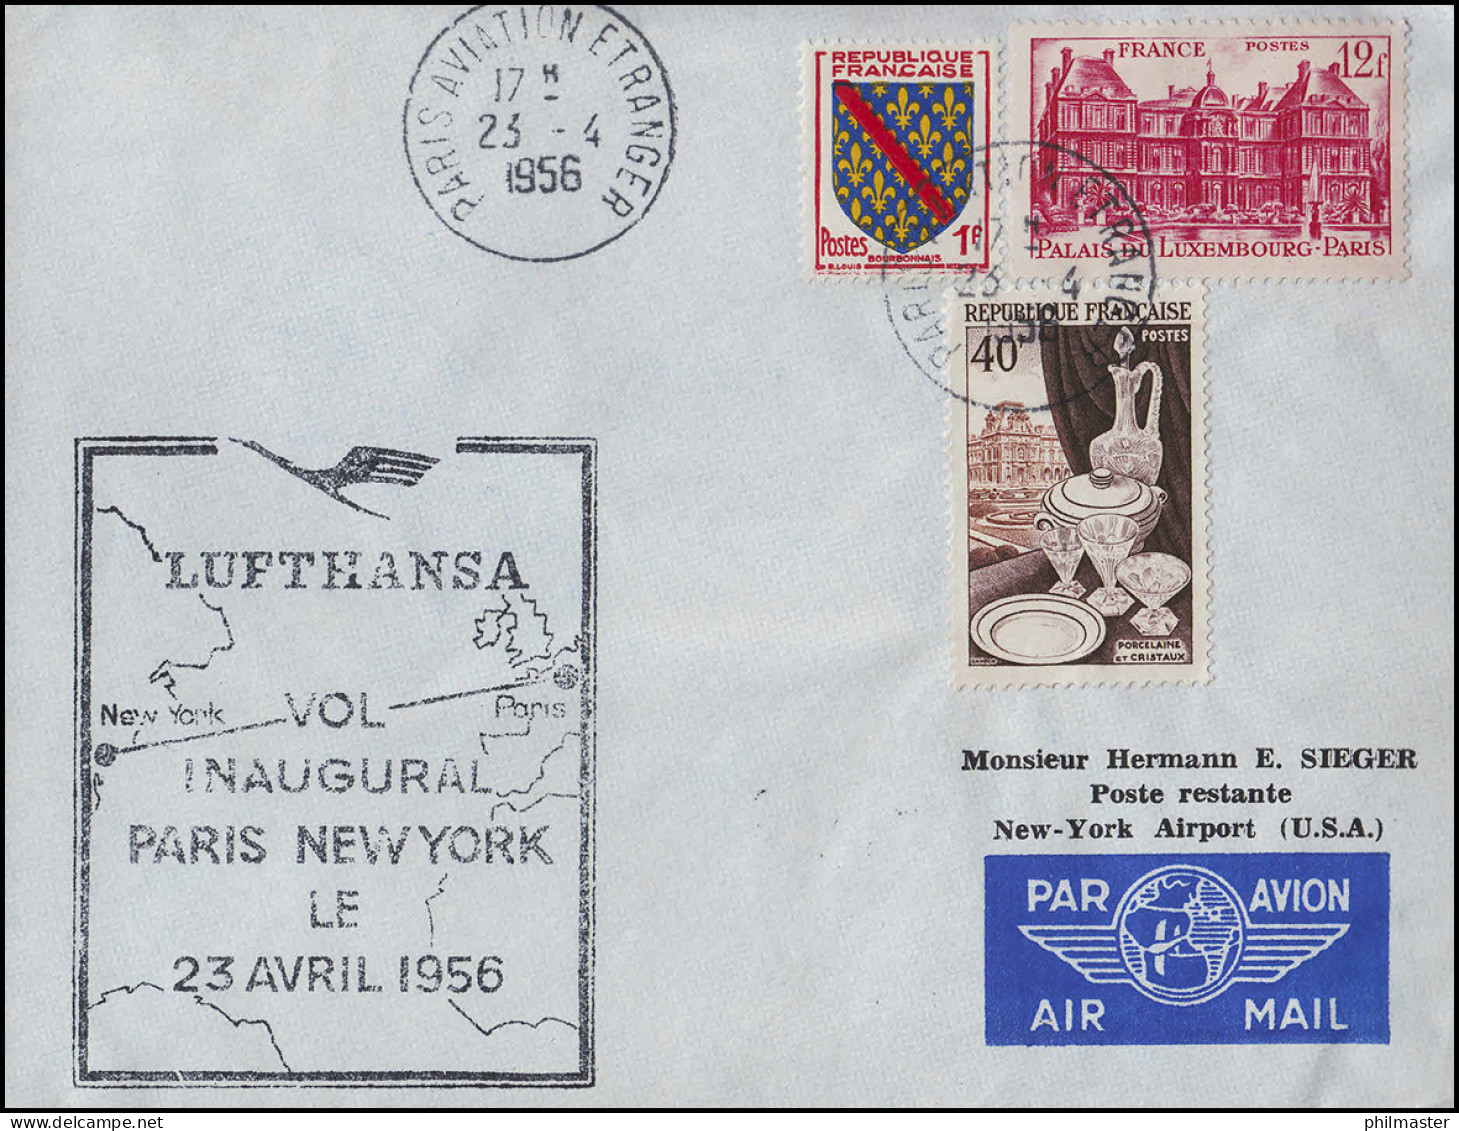 Eröffnungsflug Lufthansa Paris - New York, Paris 23.4.1956/ New York 24.4.1956 - First Flight Covers